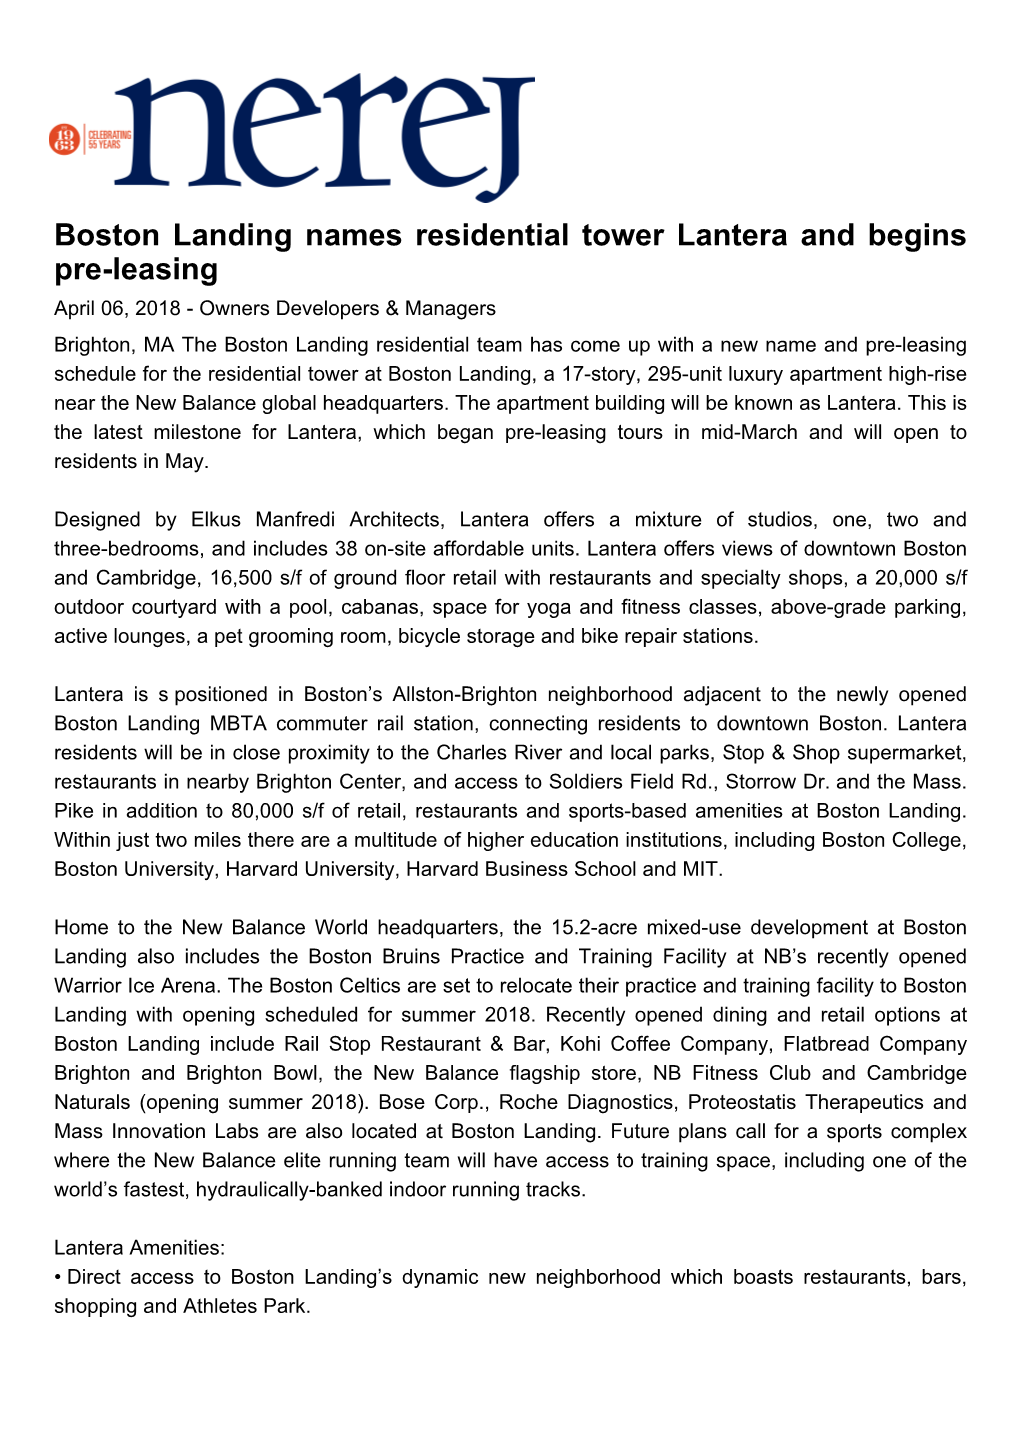 Boston Landing Names Residential Tower Lantera and Begins Pre-Leasing